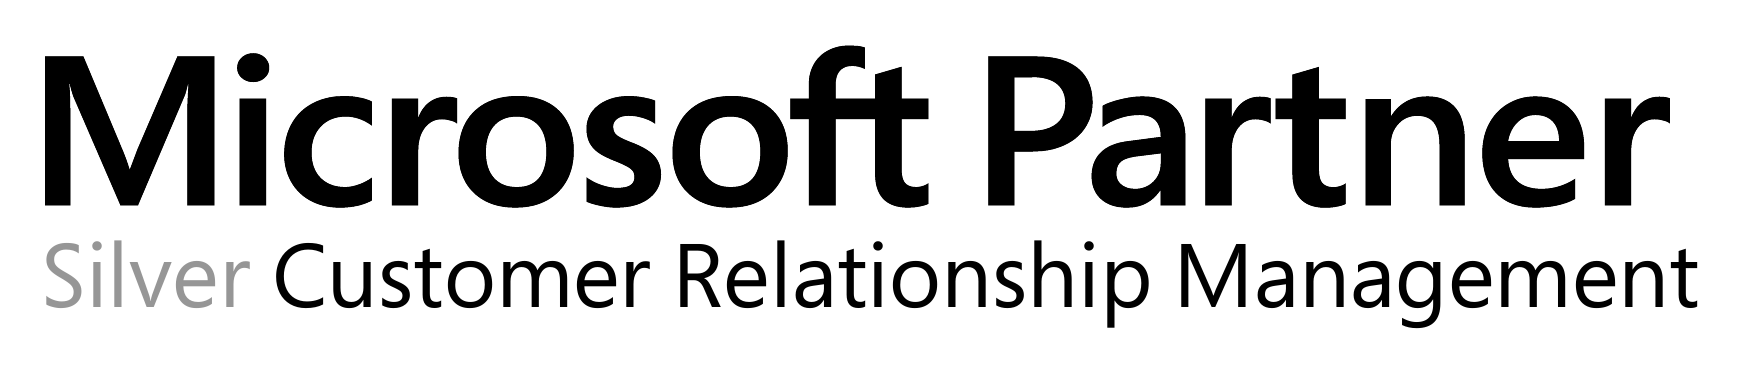 Microsoft Partner Silver Customer Relationship Management